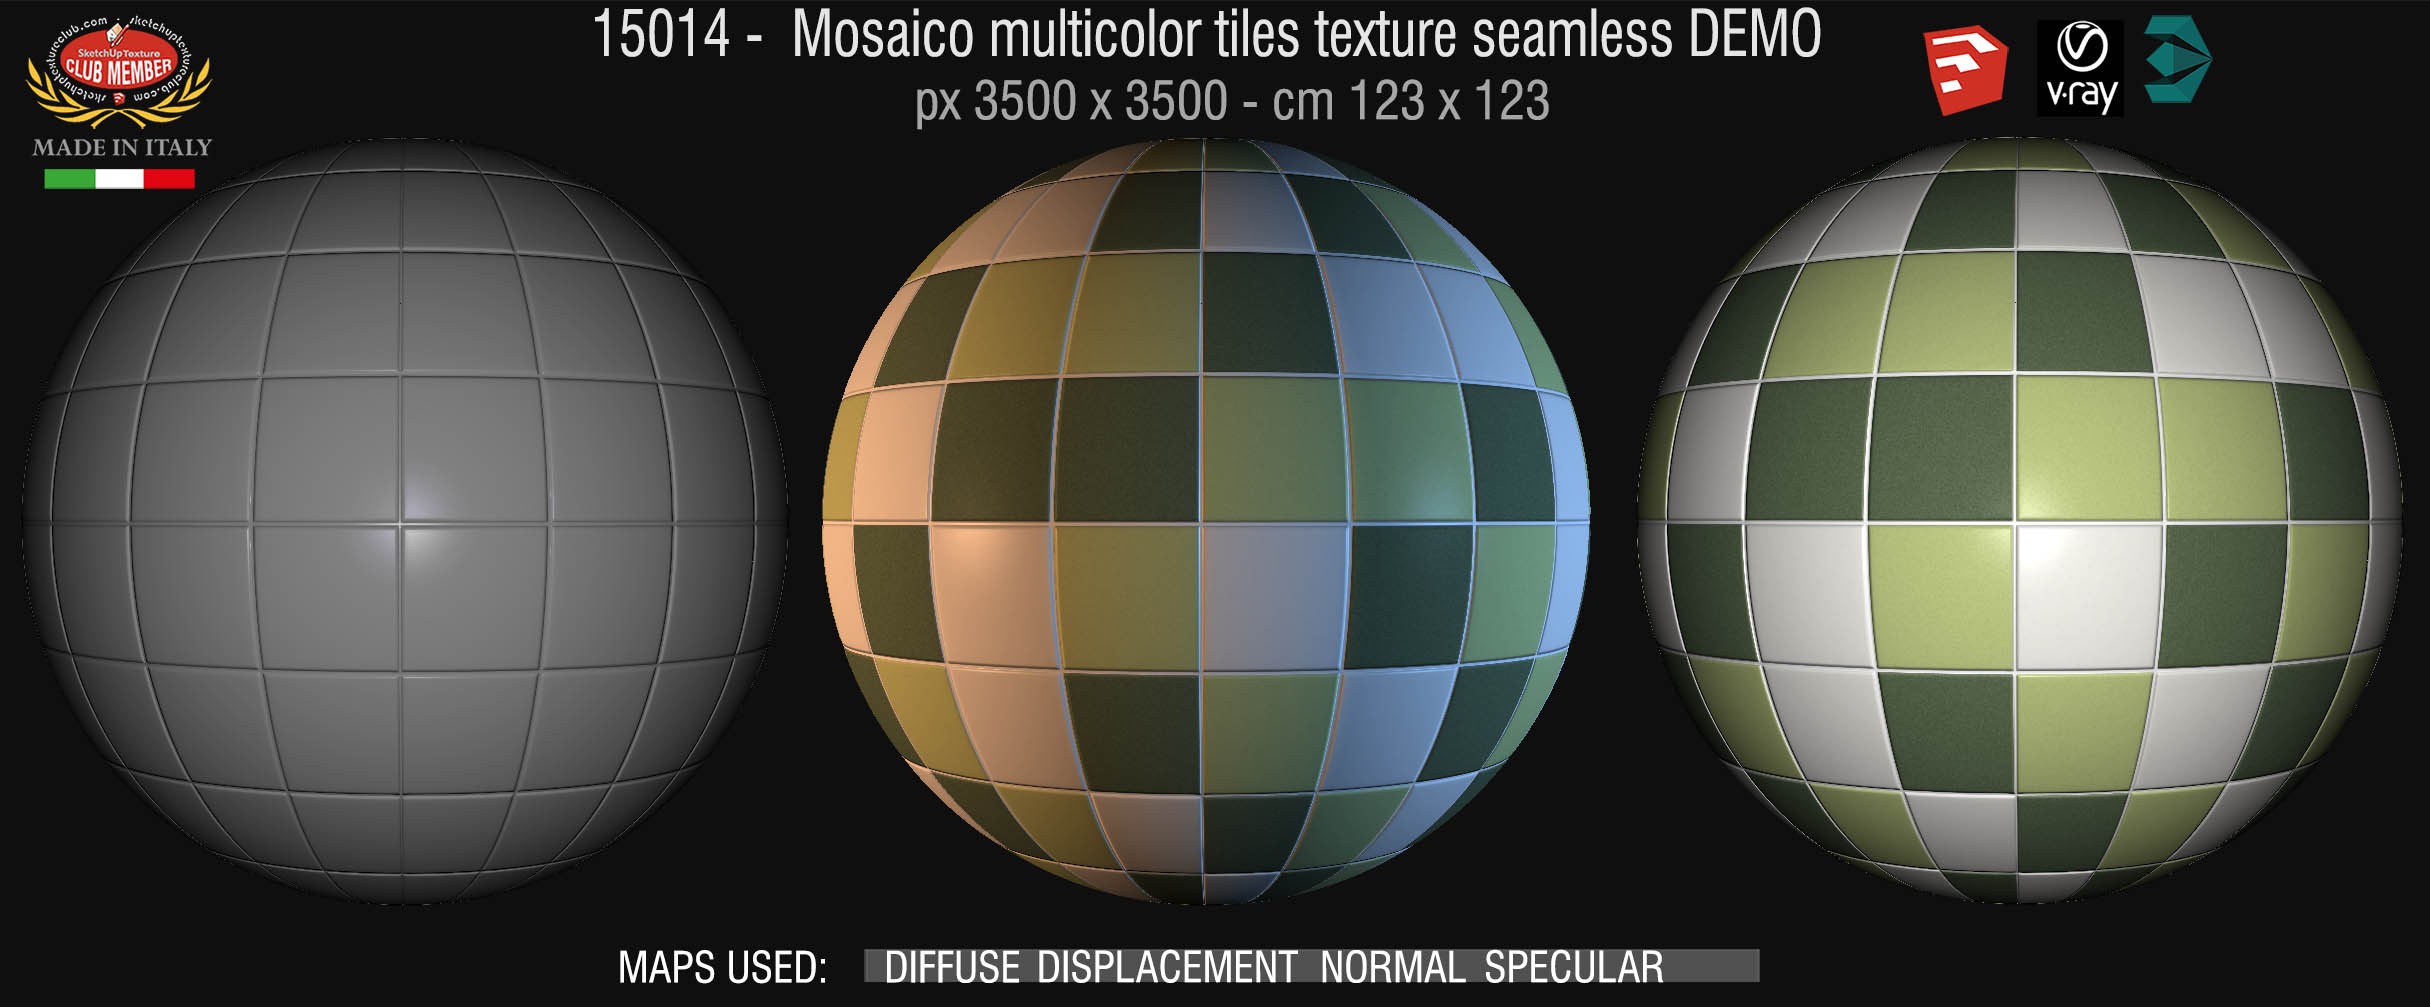 15014 Mosaico multicolor tiles texture seamless + maps DEMO